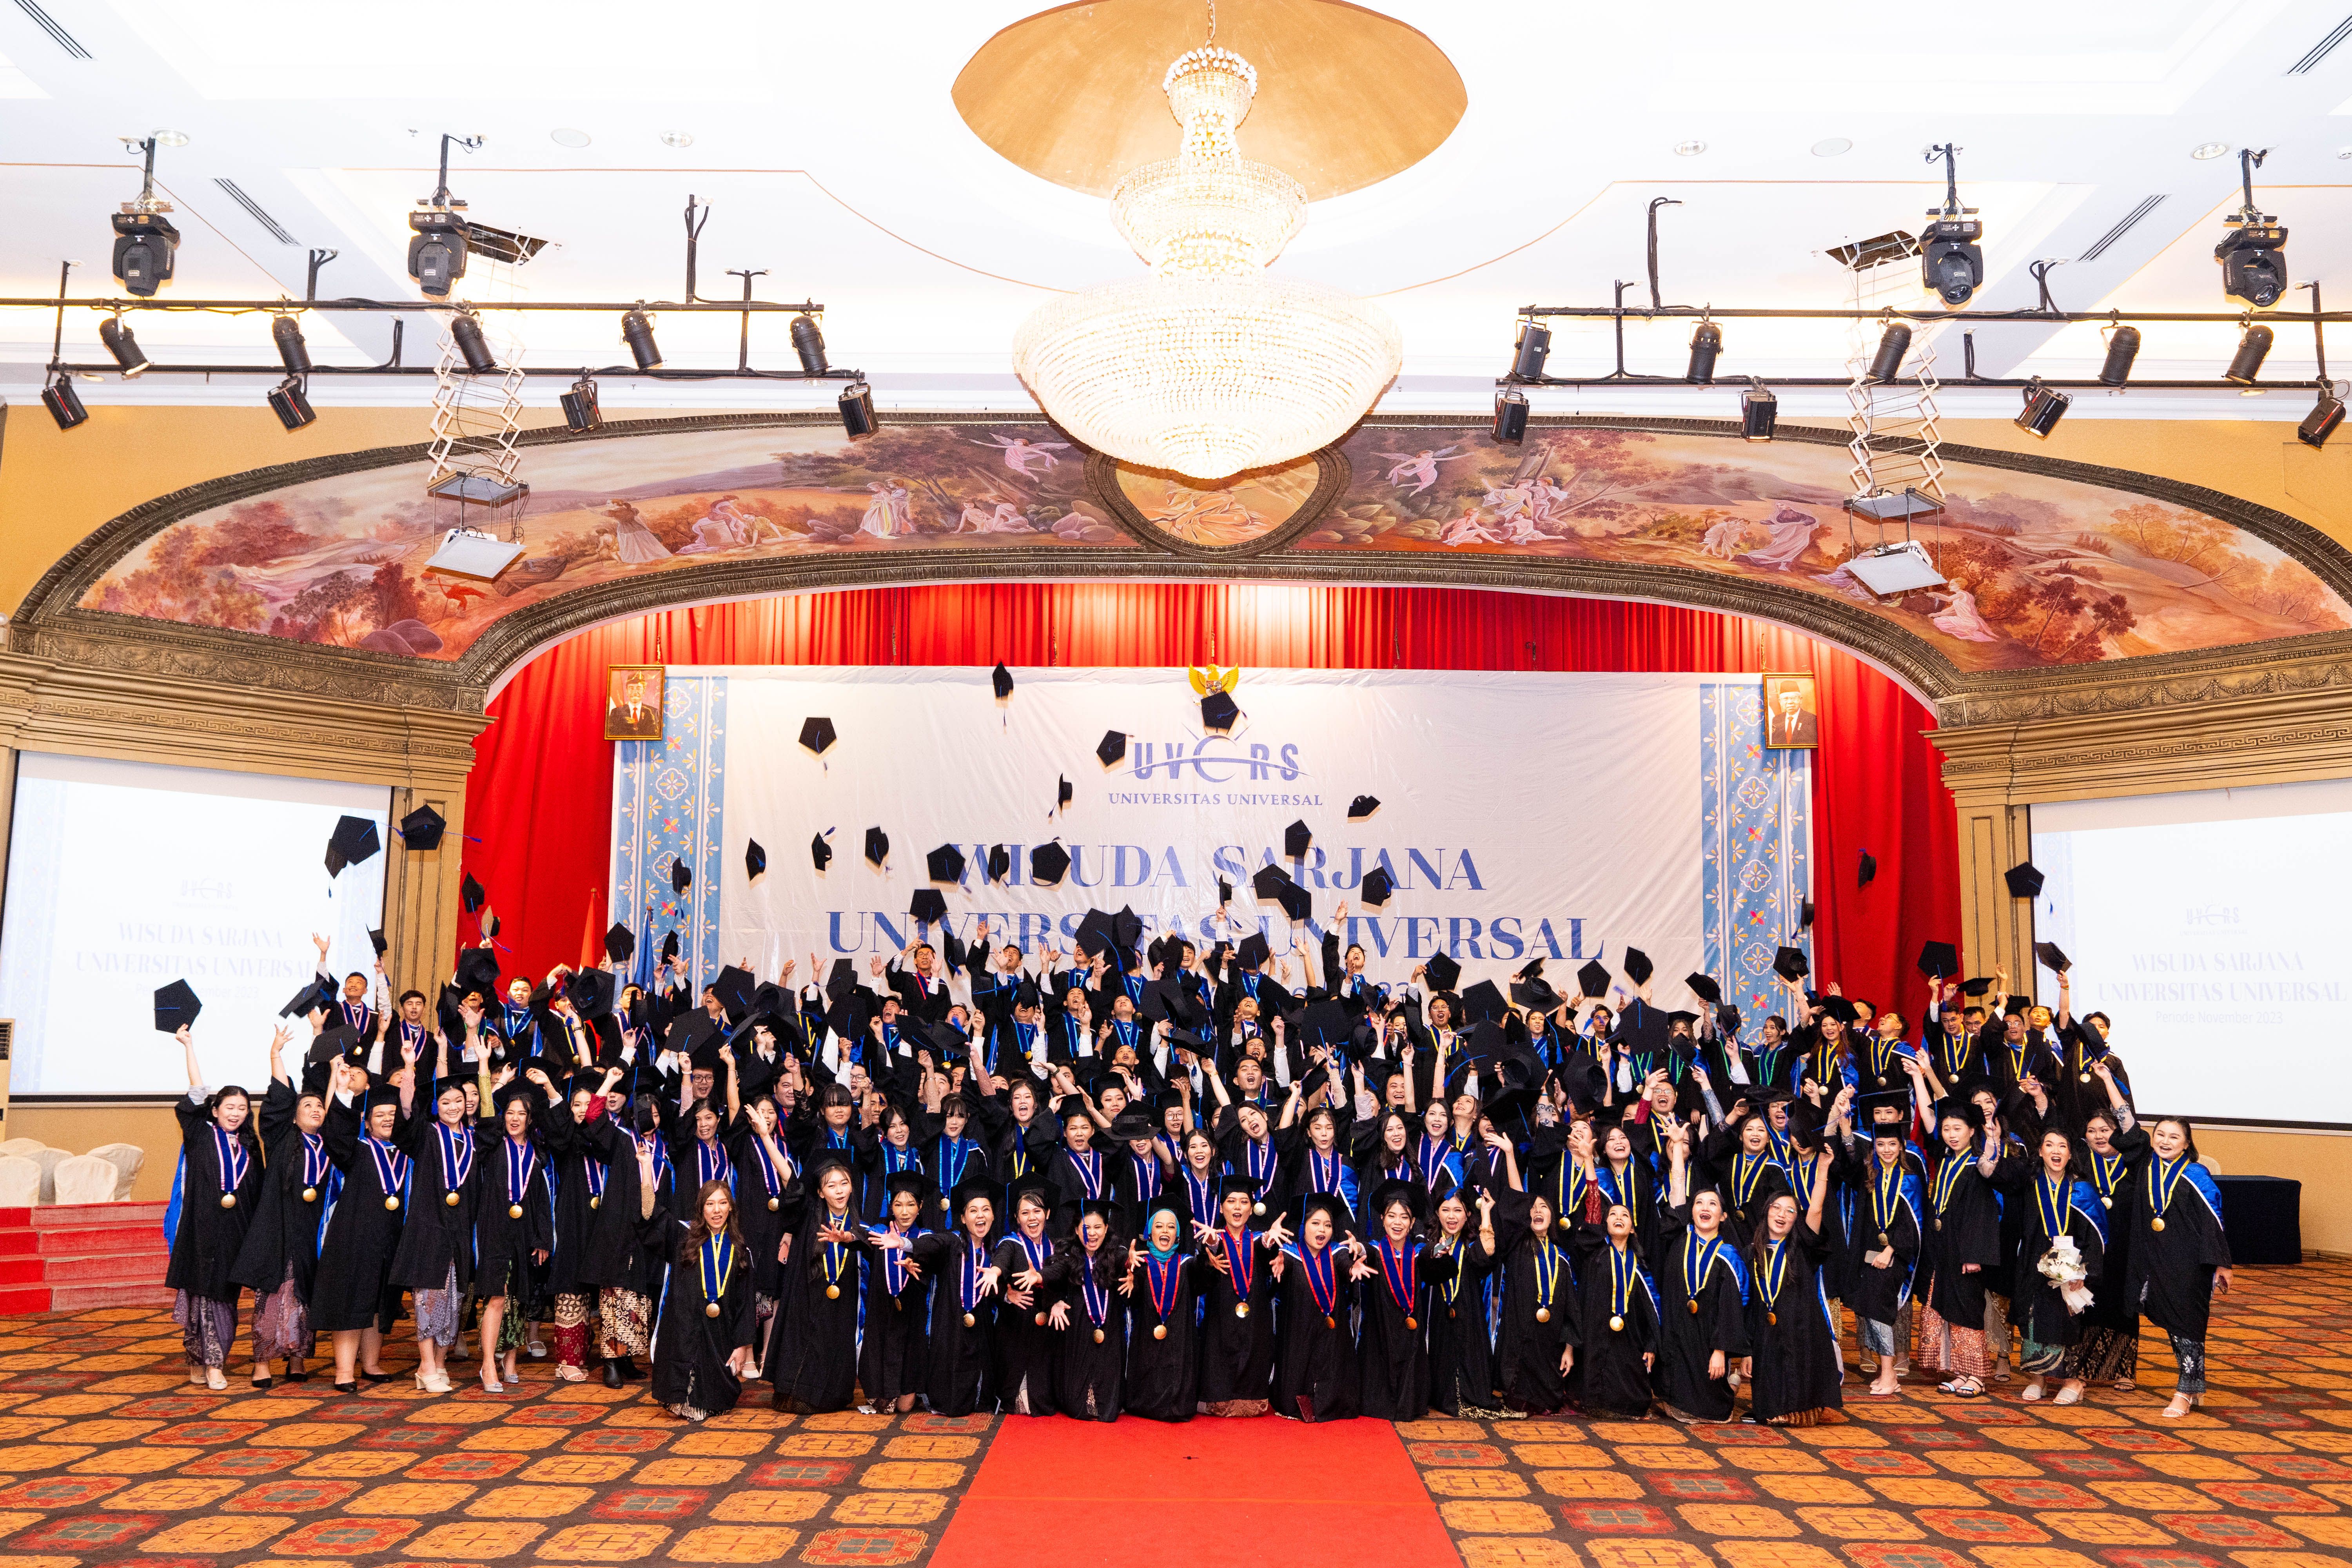 congratulations-on-universitas-universal-undergraduate-class-of-2023